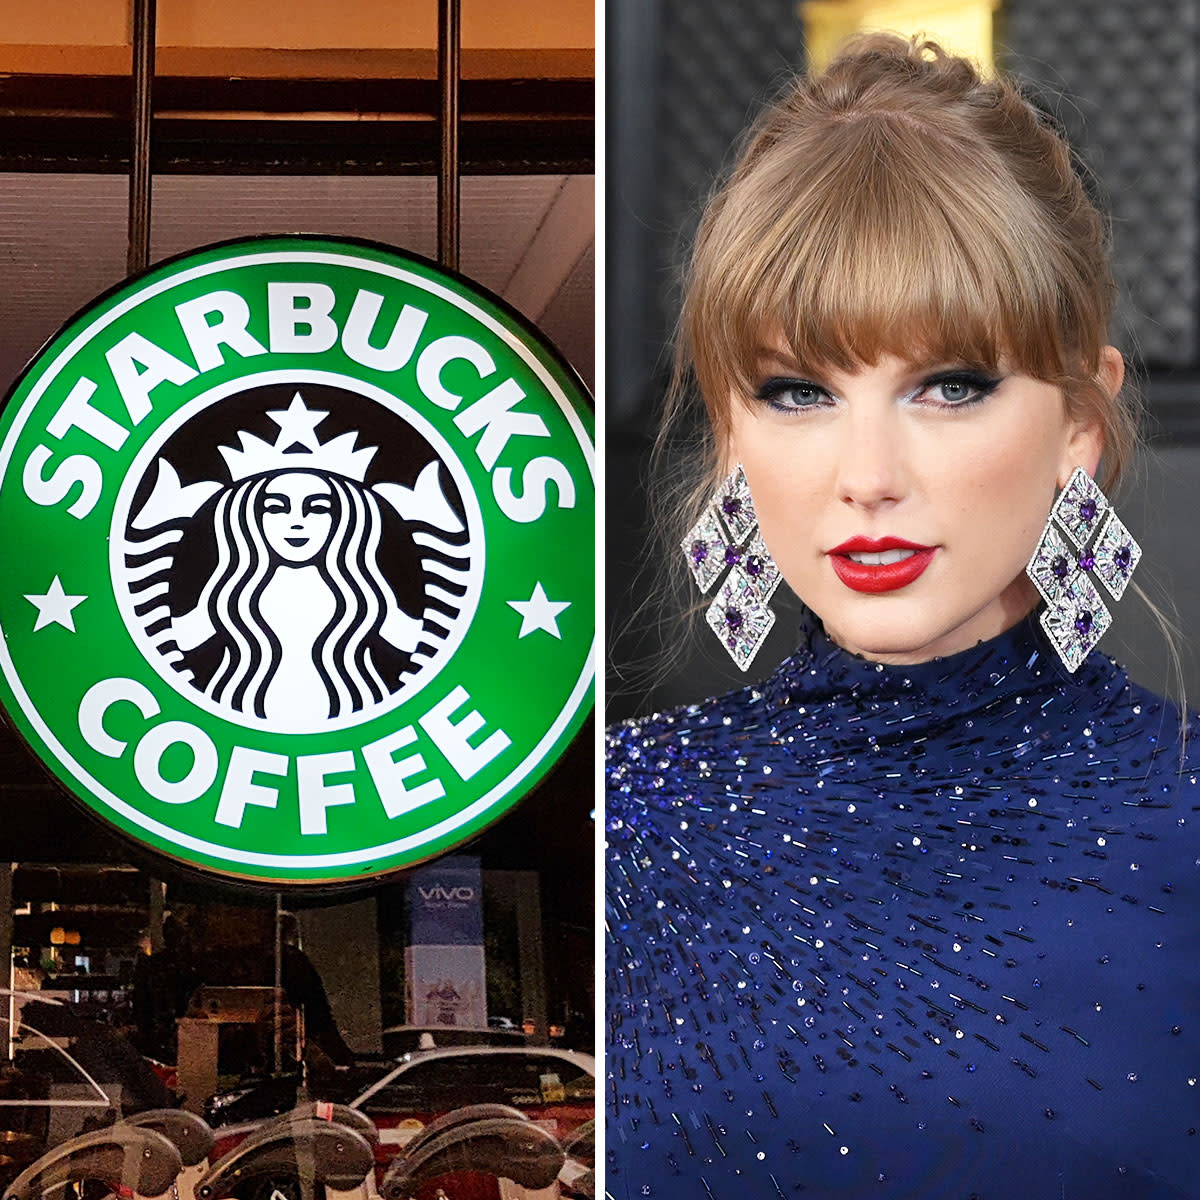 Starbucks logo and Taylor Swift headshot